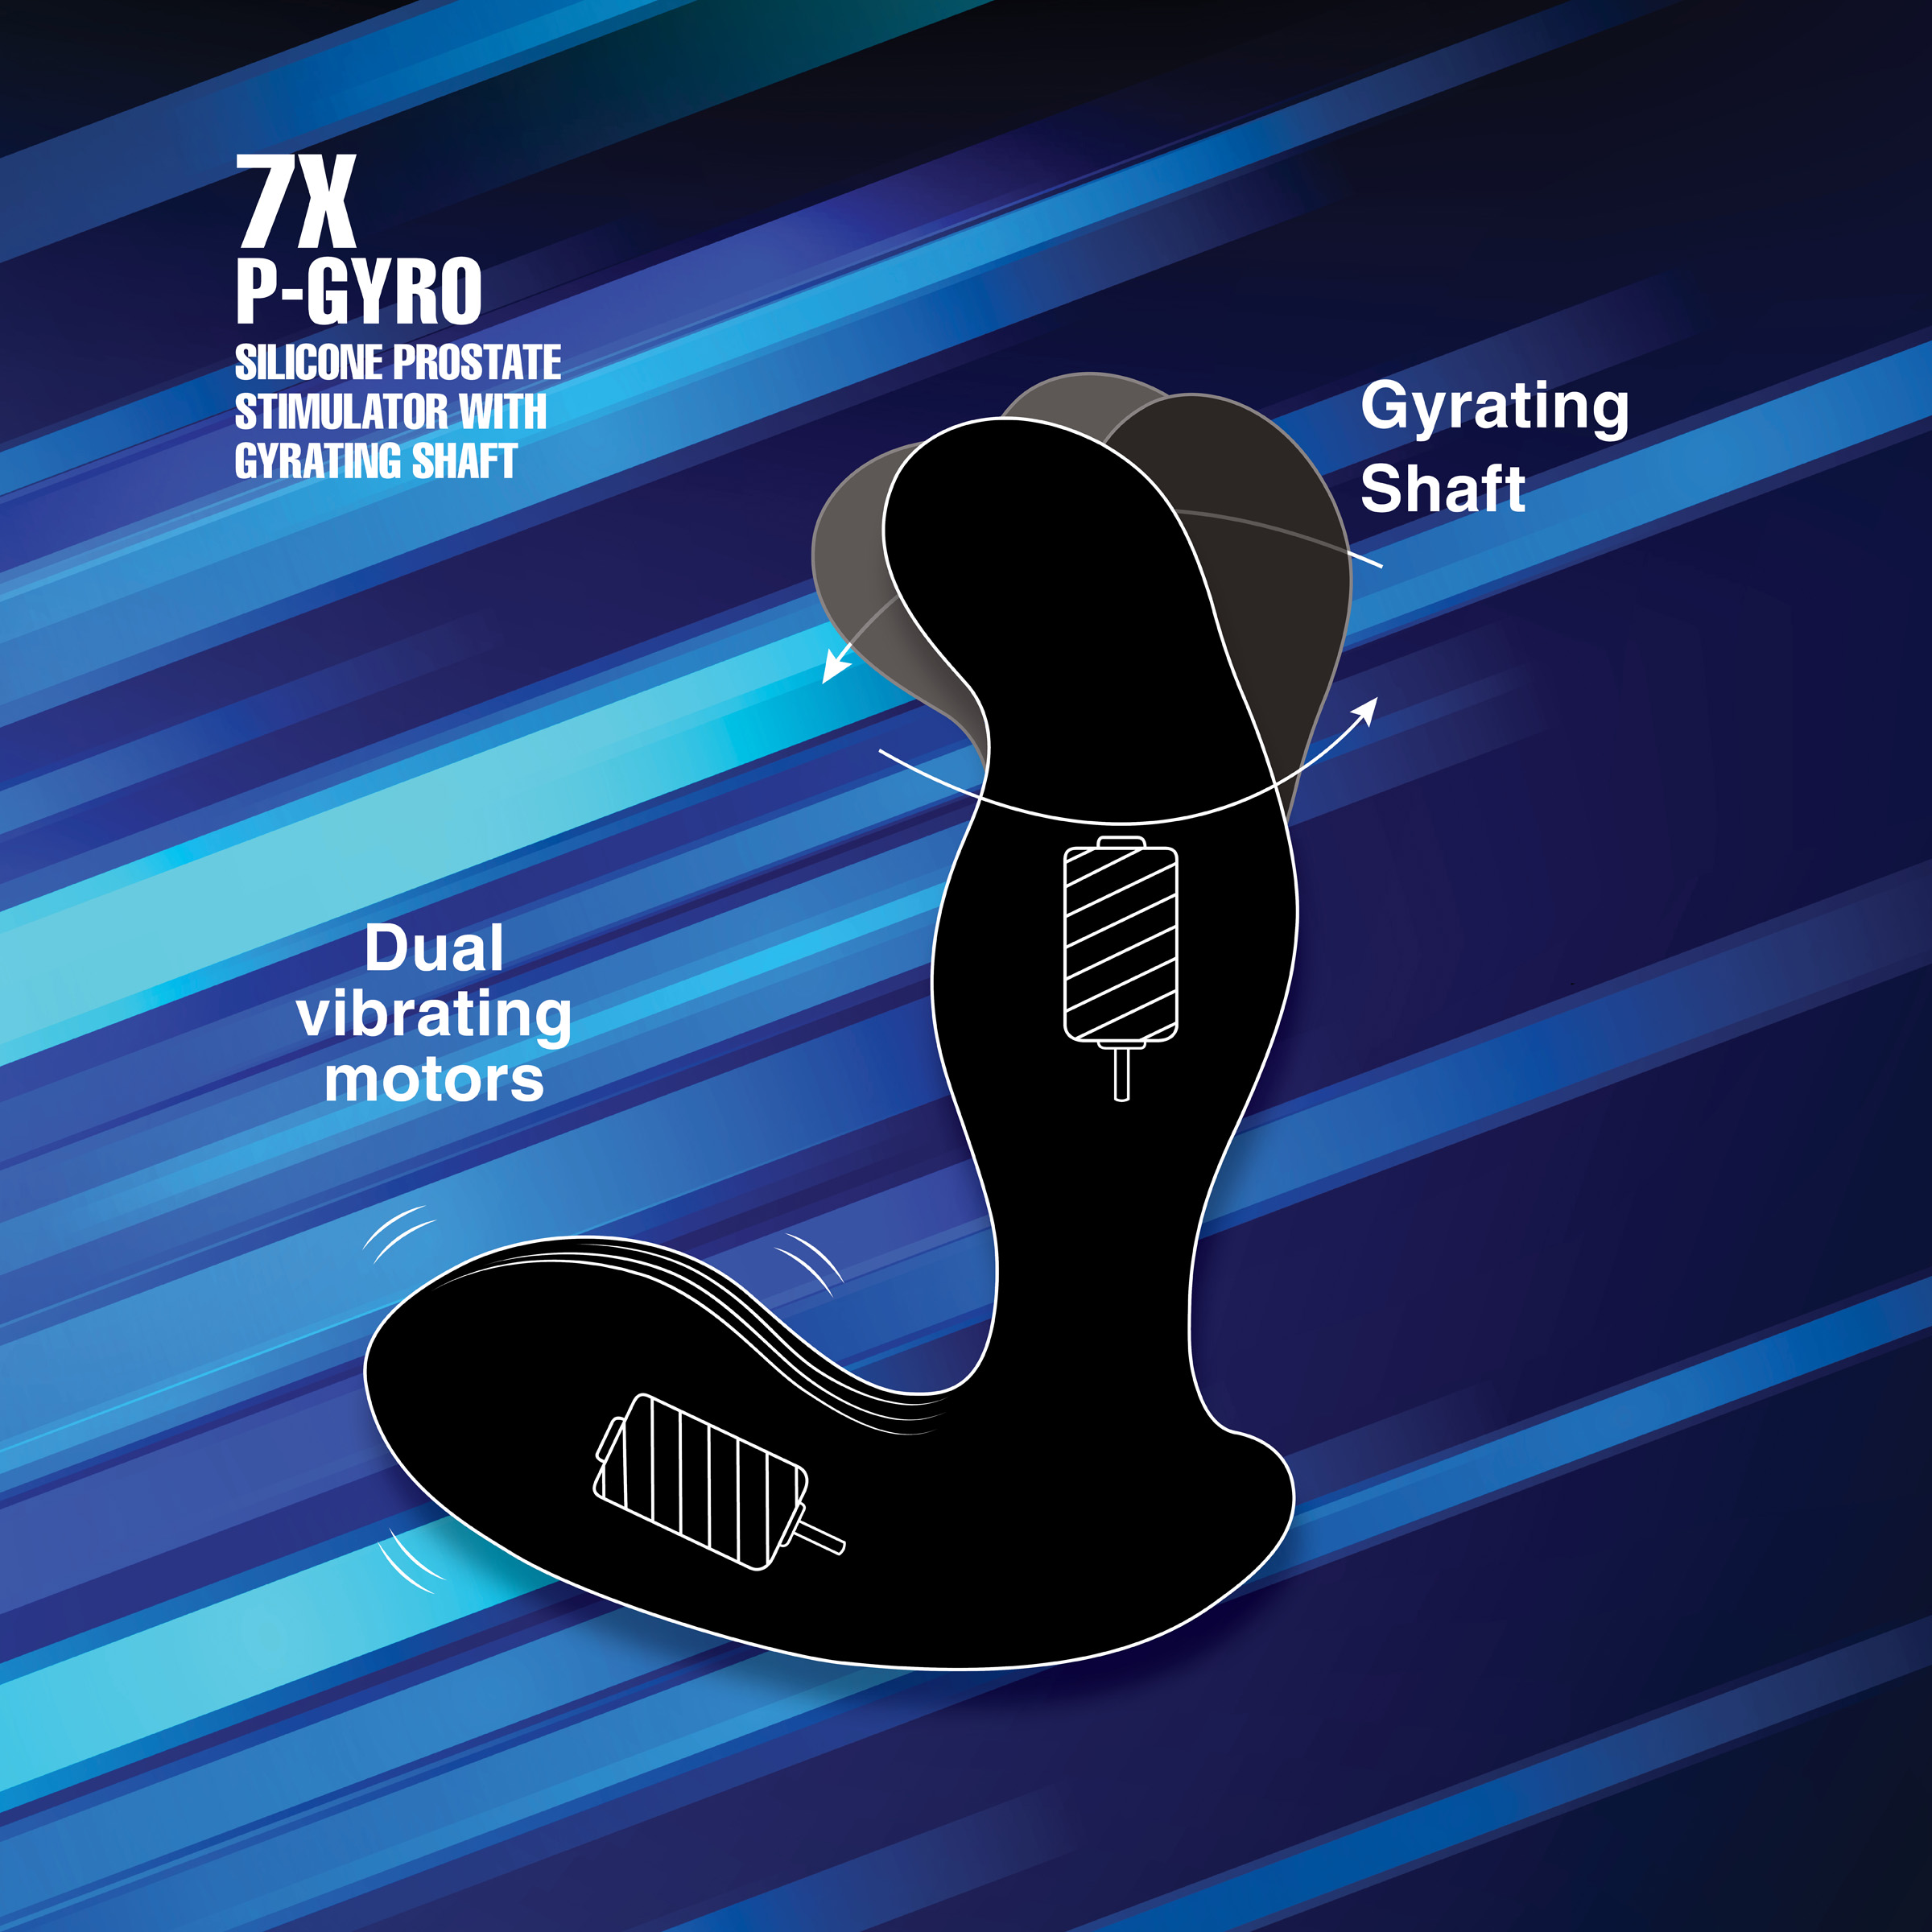 7X P-Gyro Silicone Prostate Stimulator with Gyrating Shaft